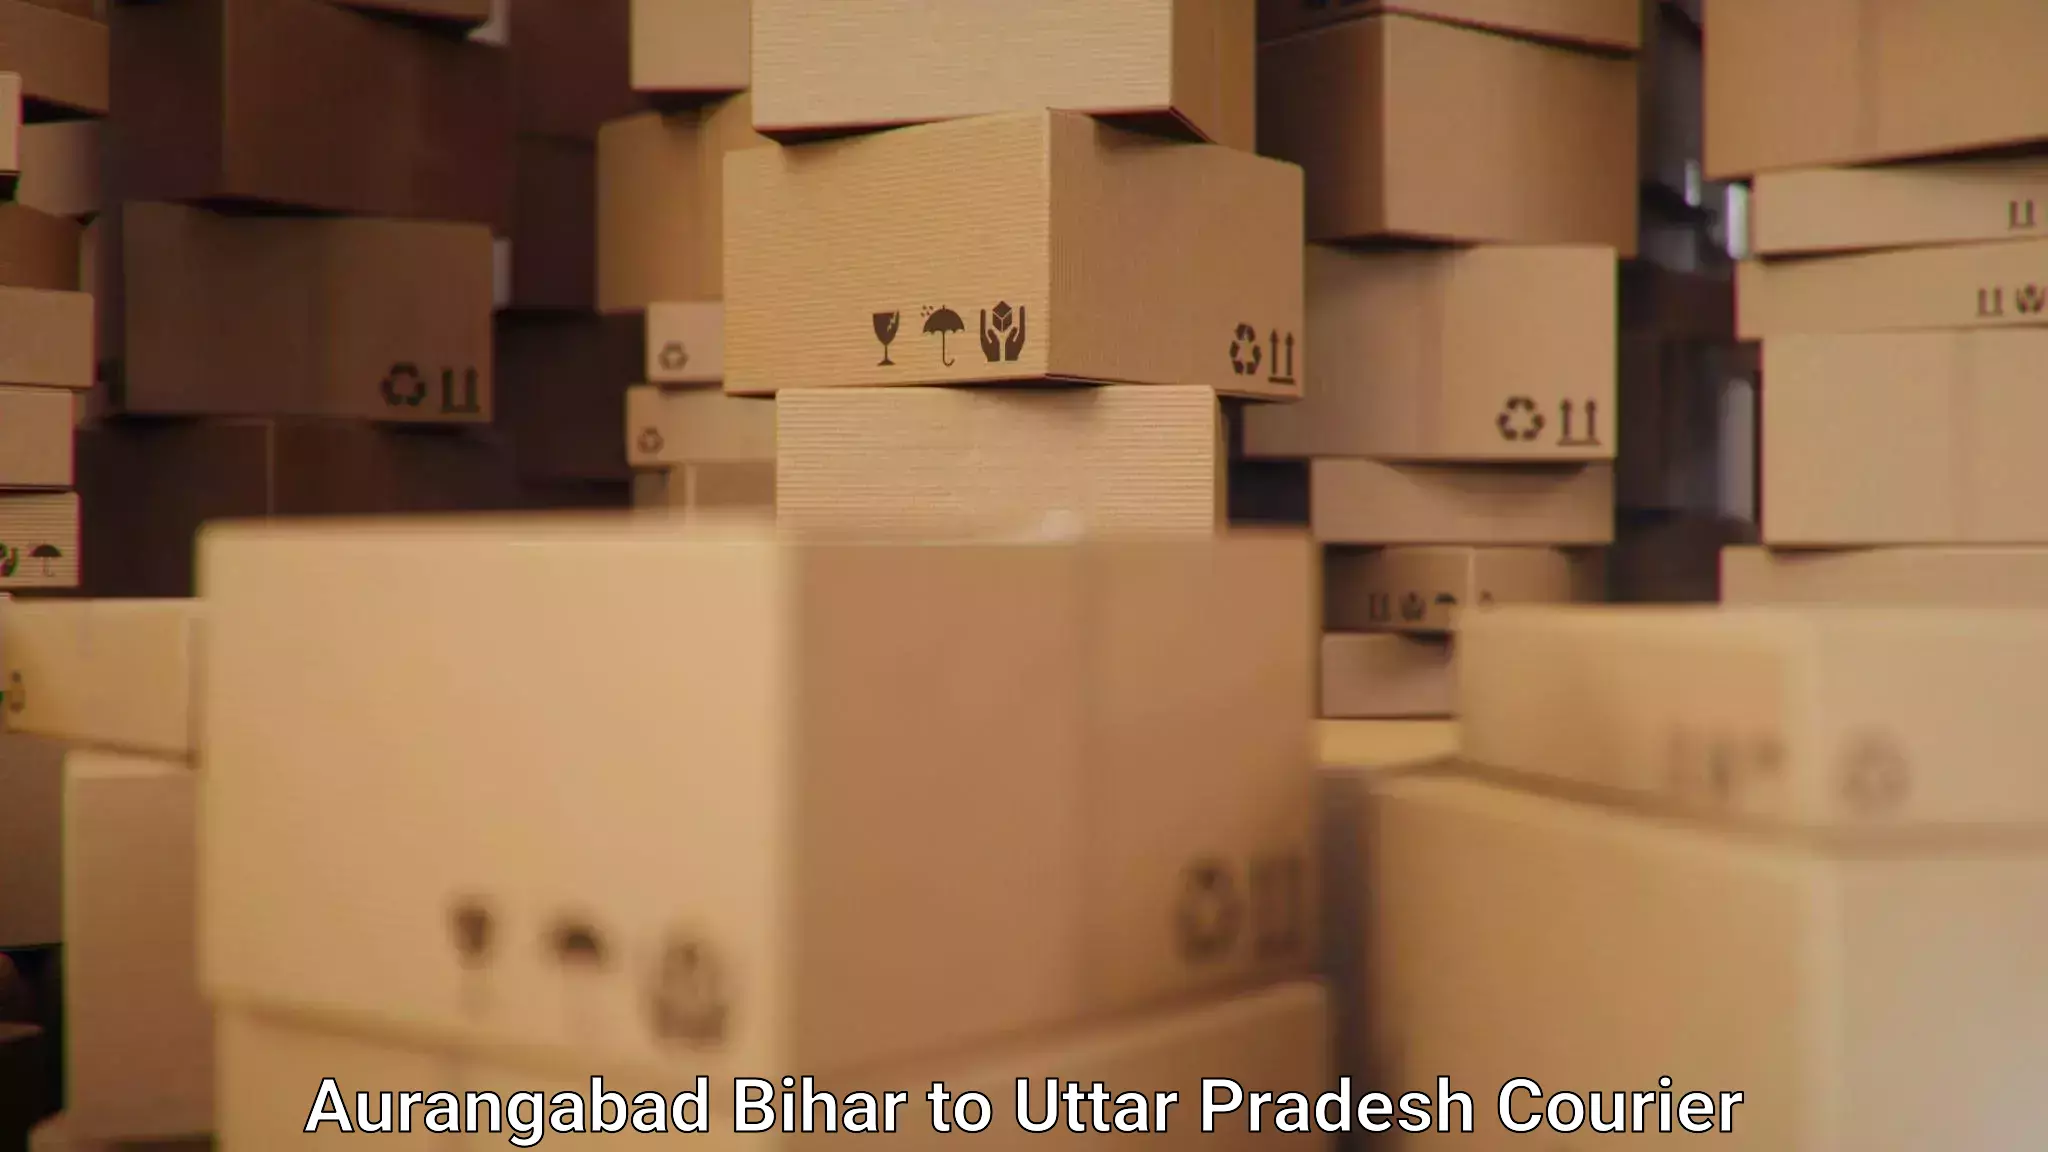 Express postal services Aurangabad Bihar to Cholapur